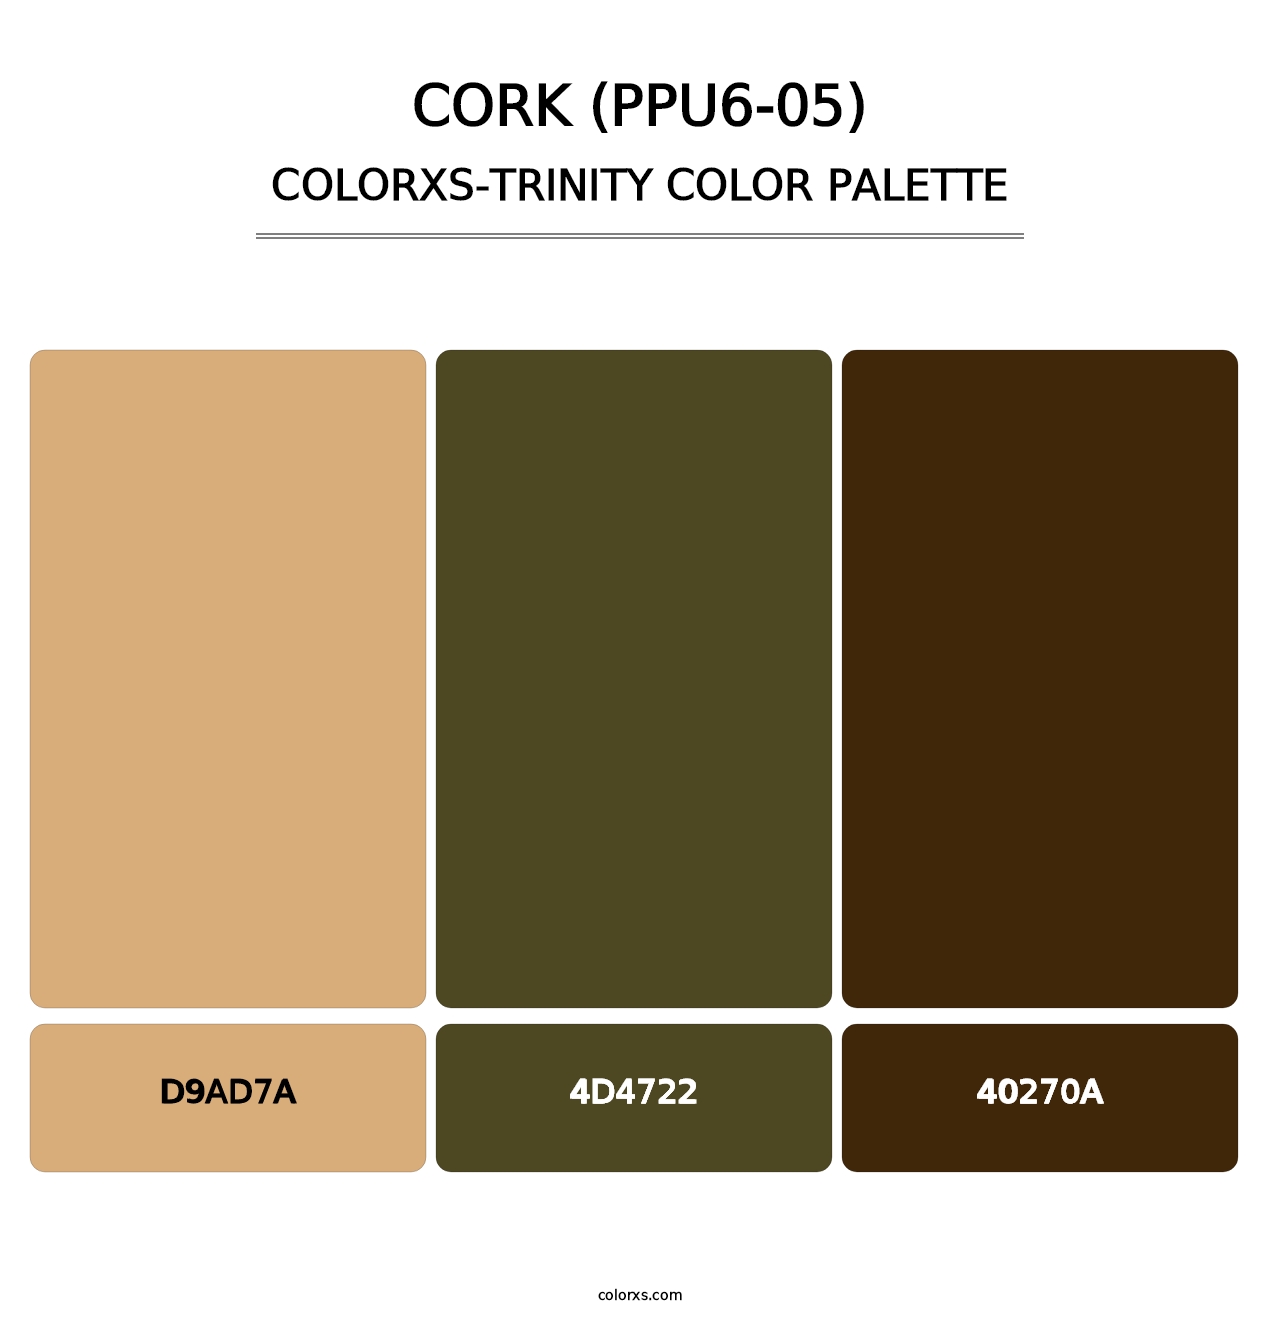 Cork (PPU6-05) - Colorxs Trinity Palette